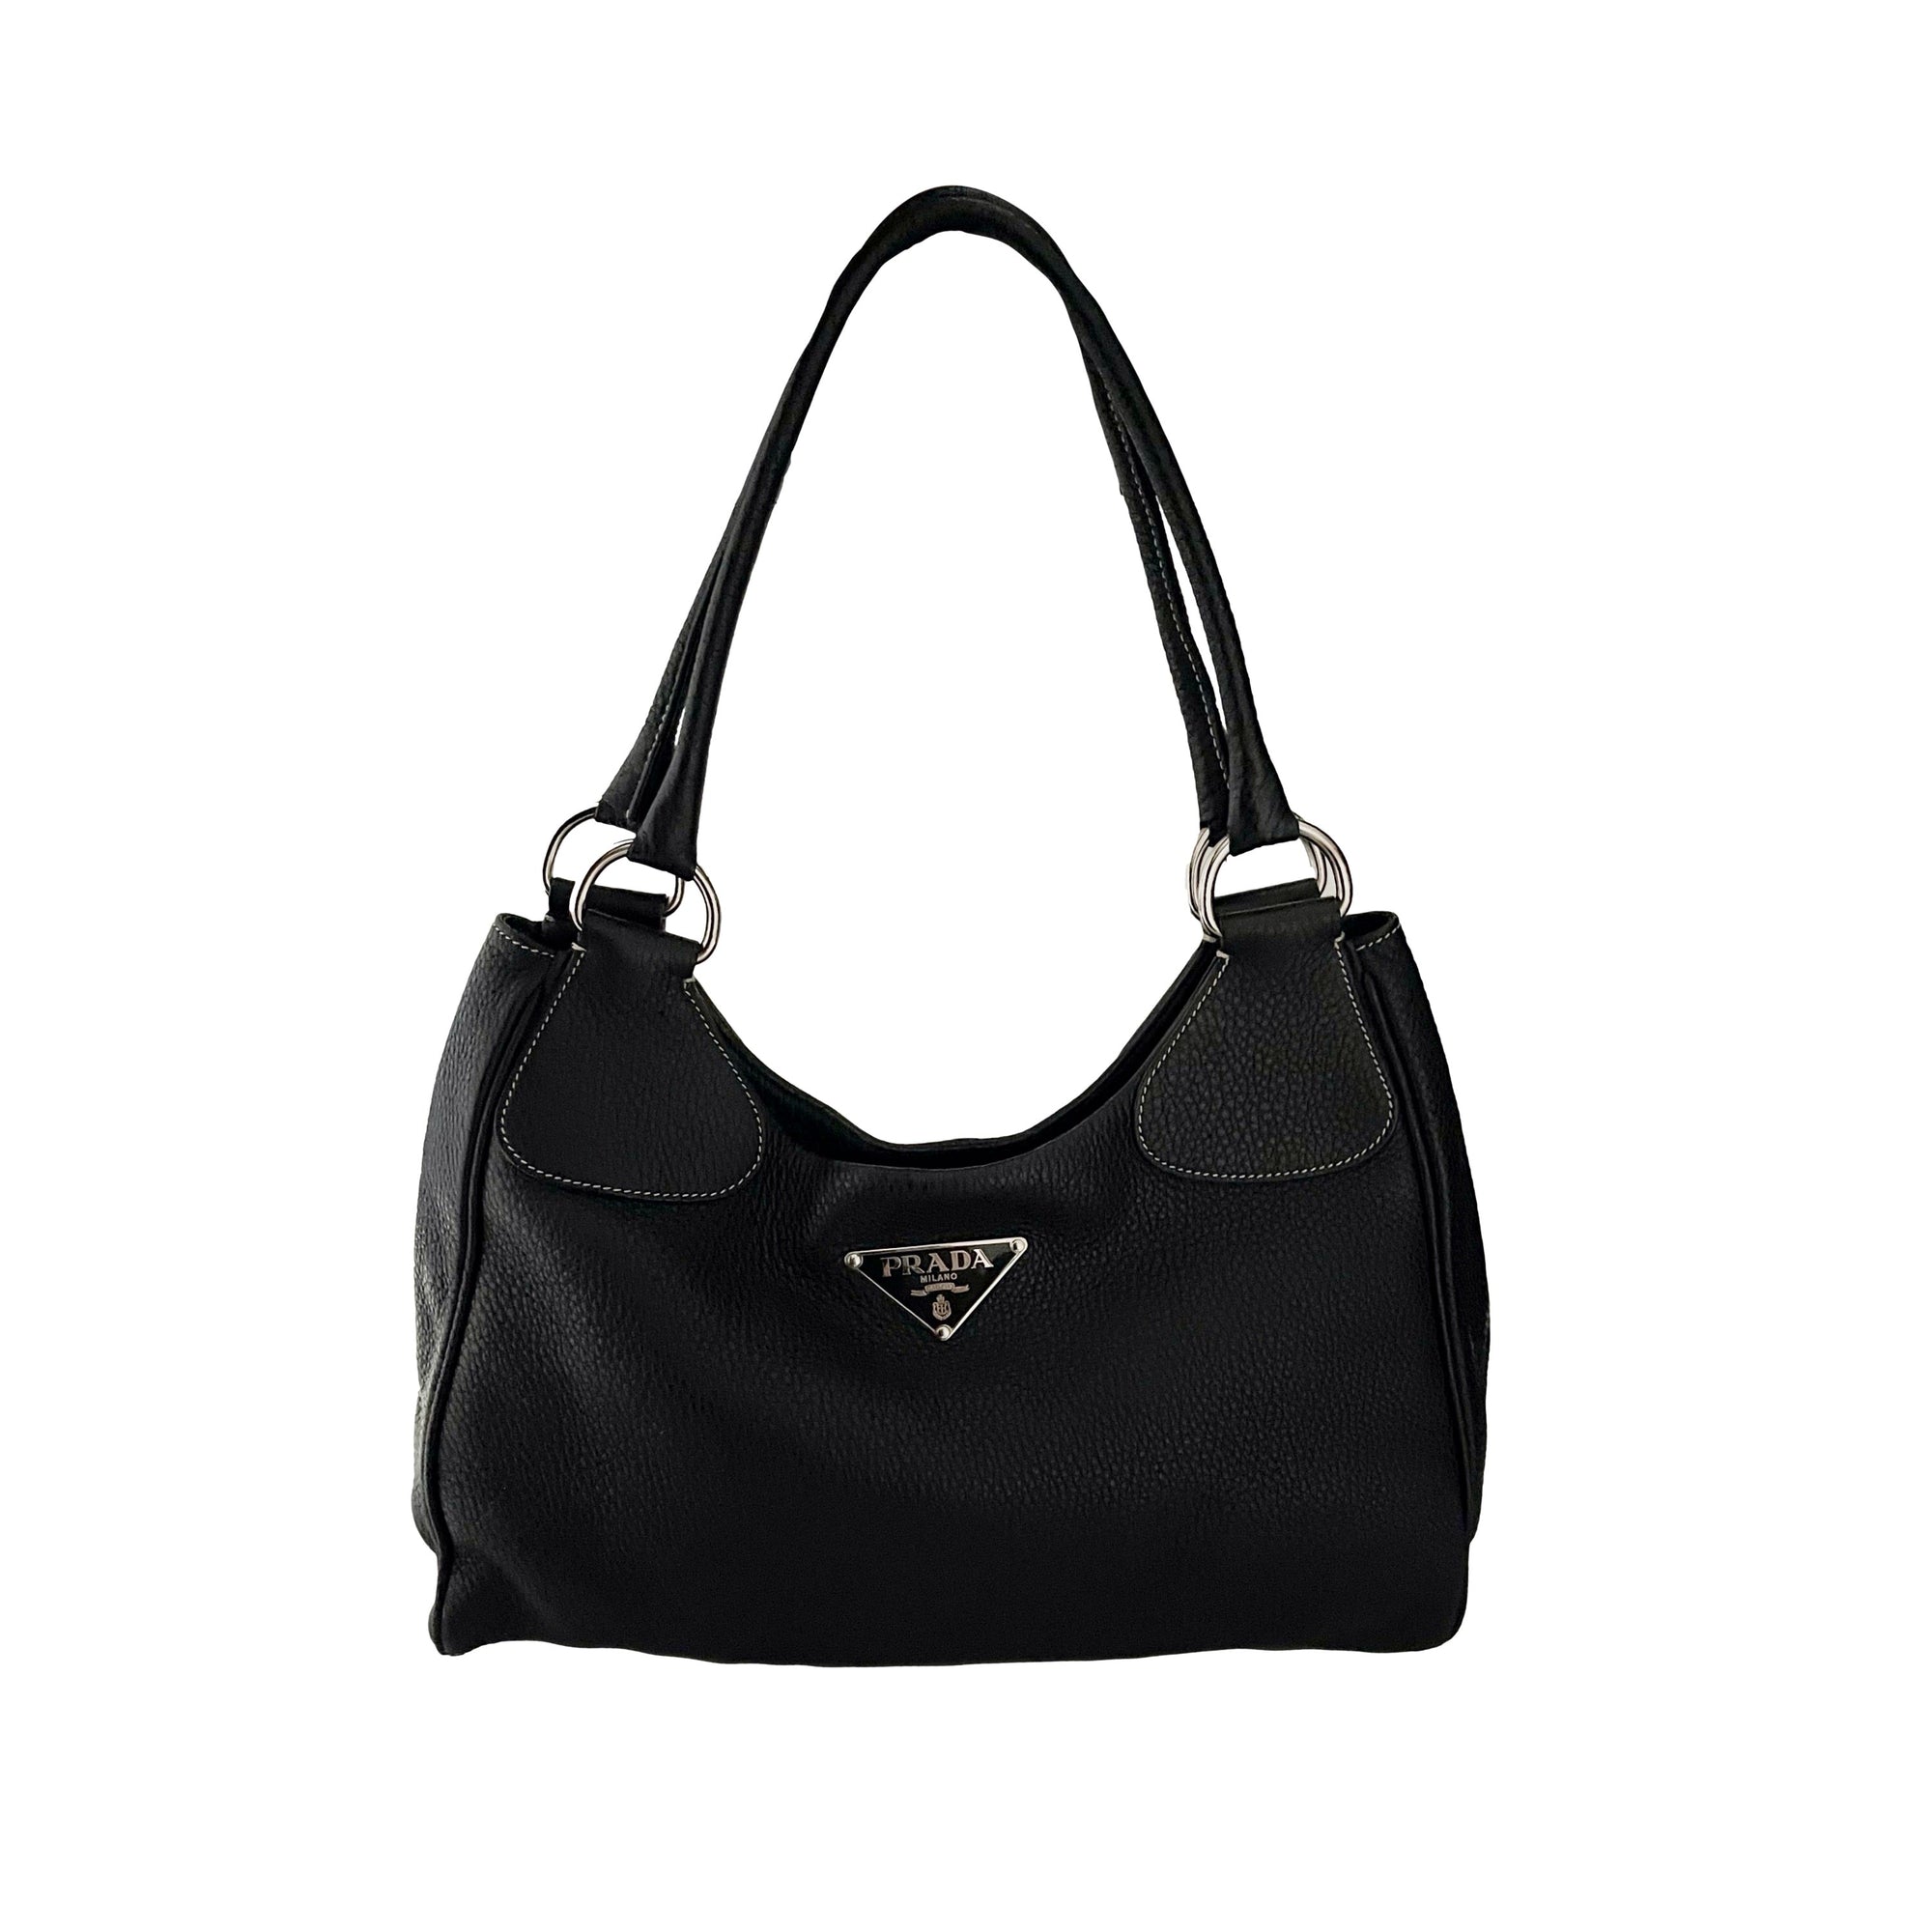 Prada Black Leather Logo Hobo Shoulder Bag - Handbags